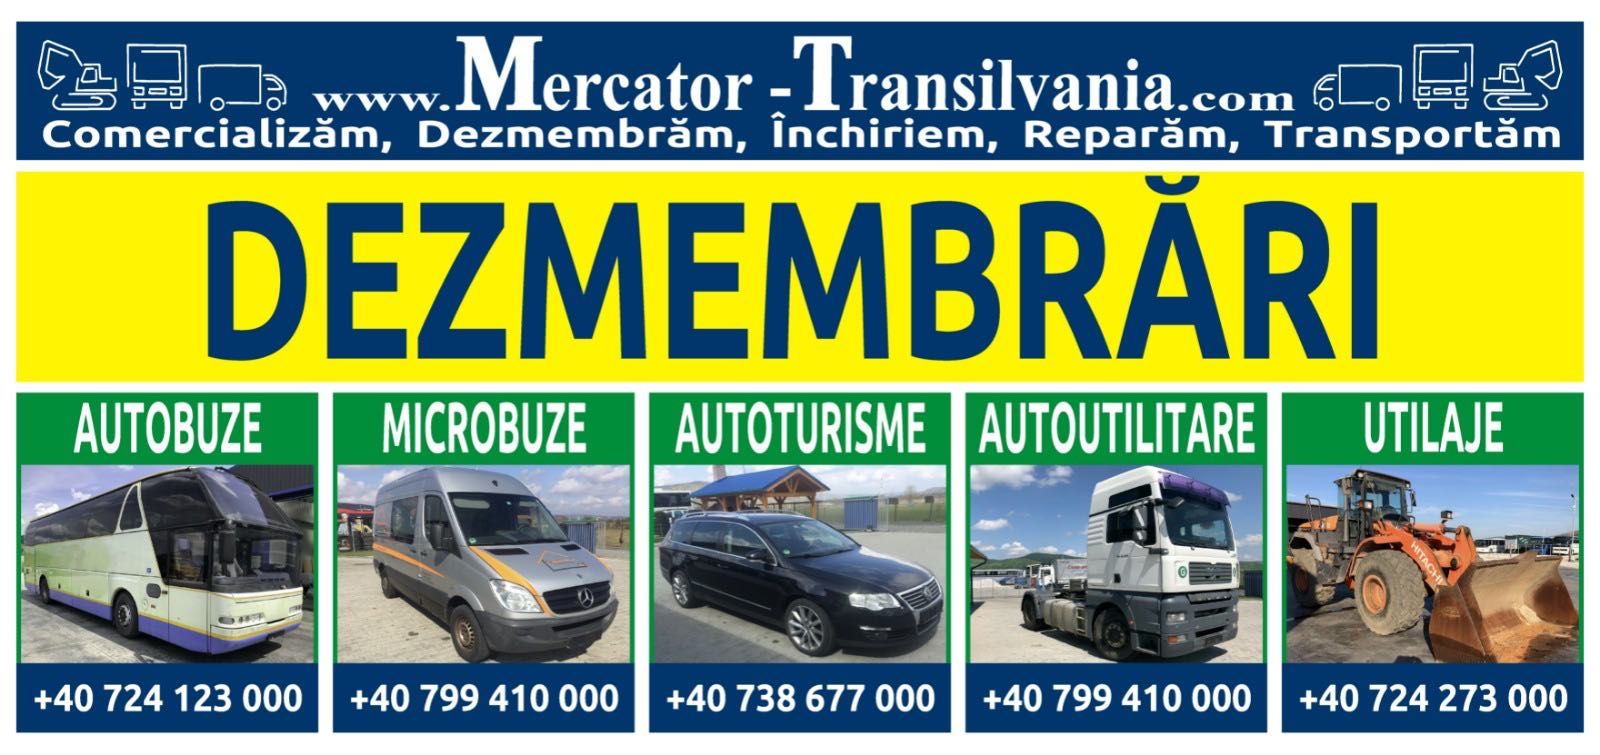 Motor Mercedes , Dezmembrari, Piese Auto, Autoturisme, Microbuze, Dube